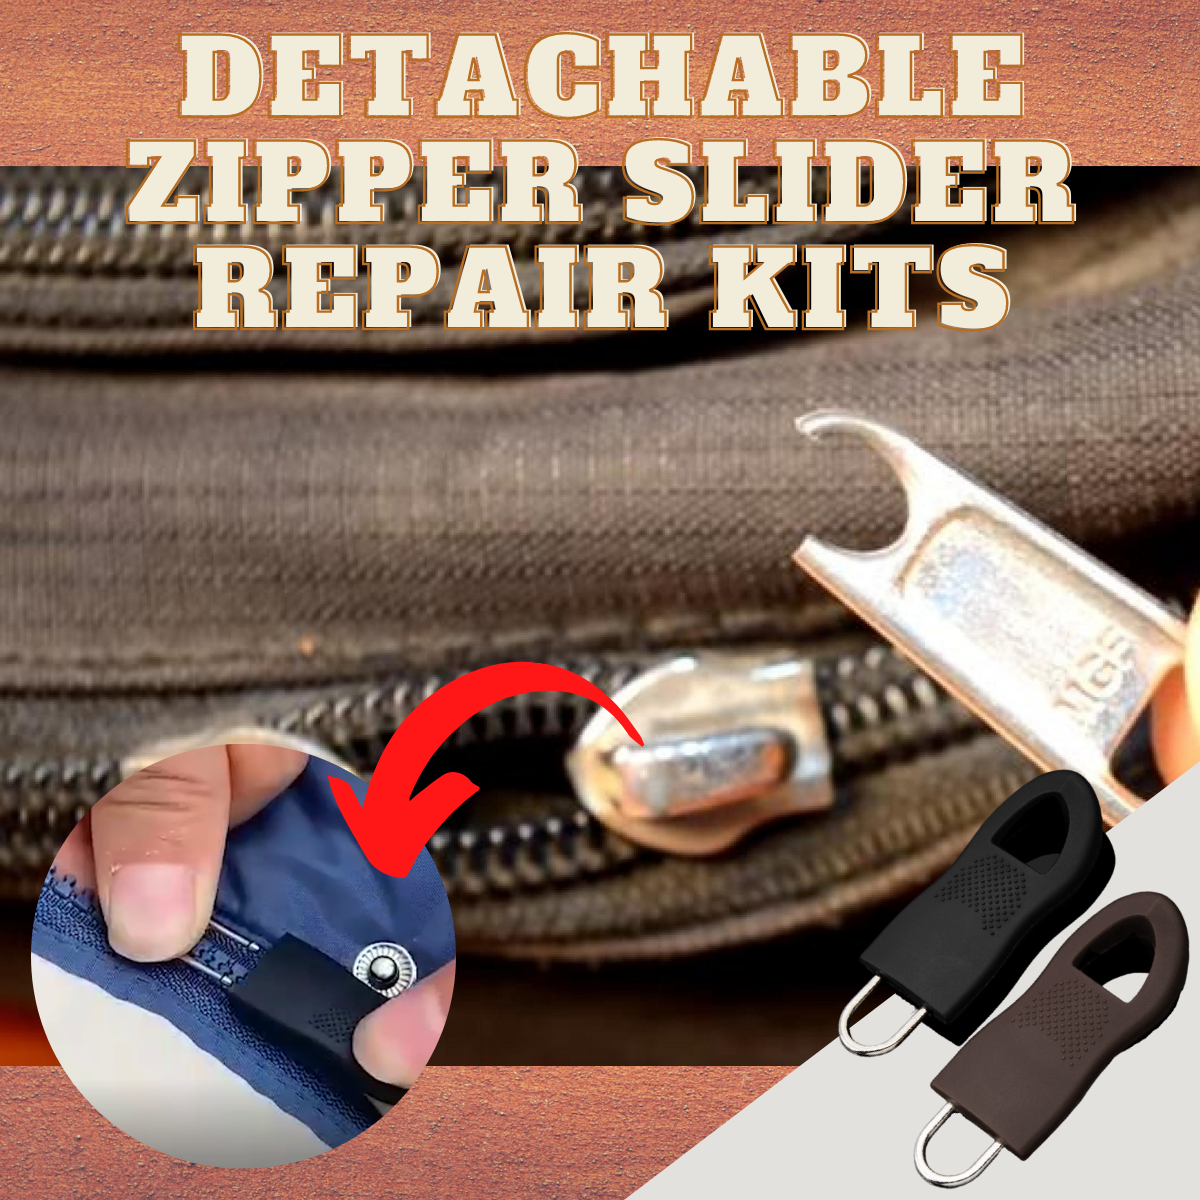 Detachable Zipper Slider Repair Kit - Emily Wrey